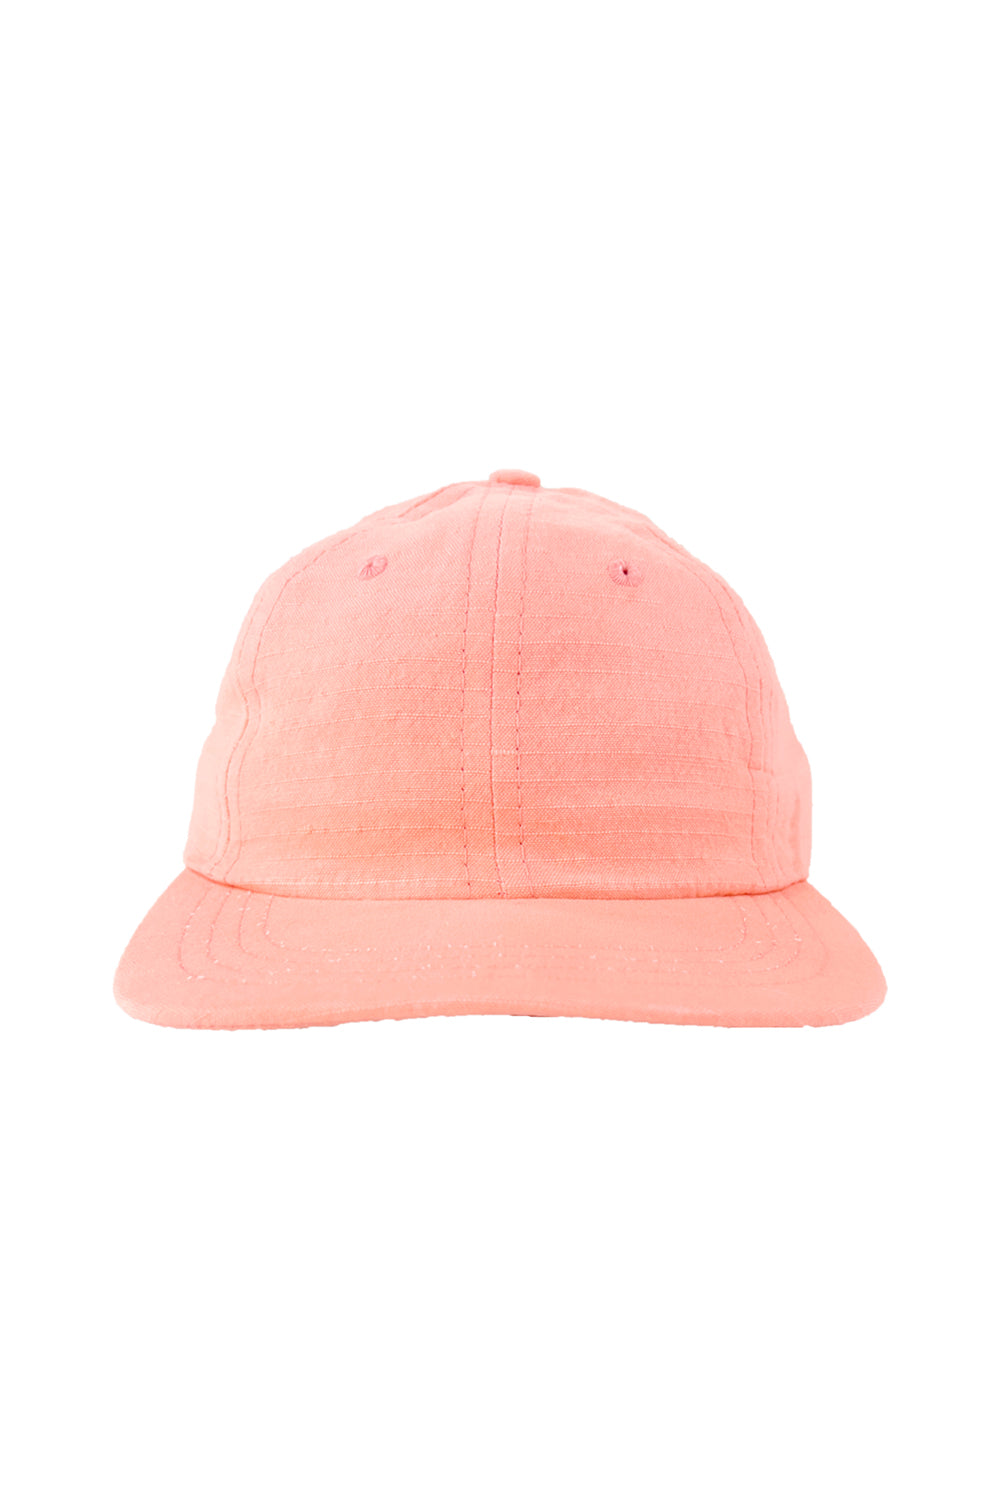 Chenga Ripstop Cap | Jungmaven Hemp Clothing & Accessories / Color: Pink Salmon